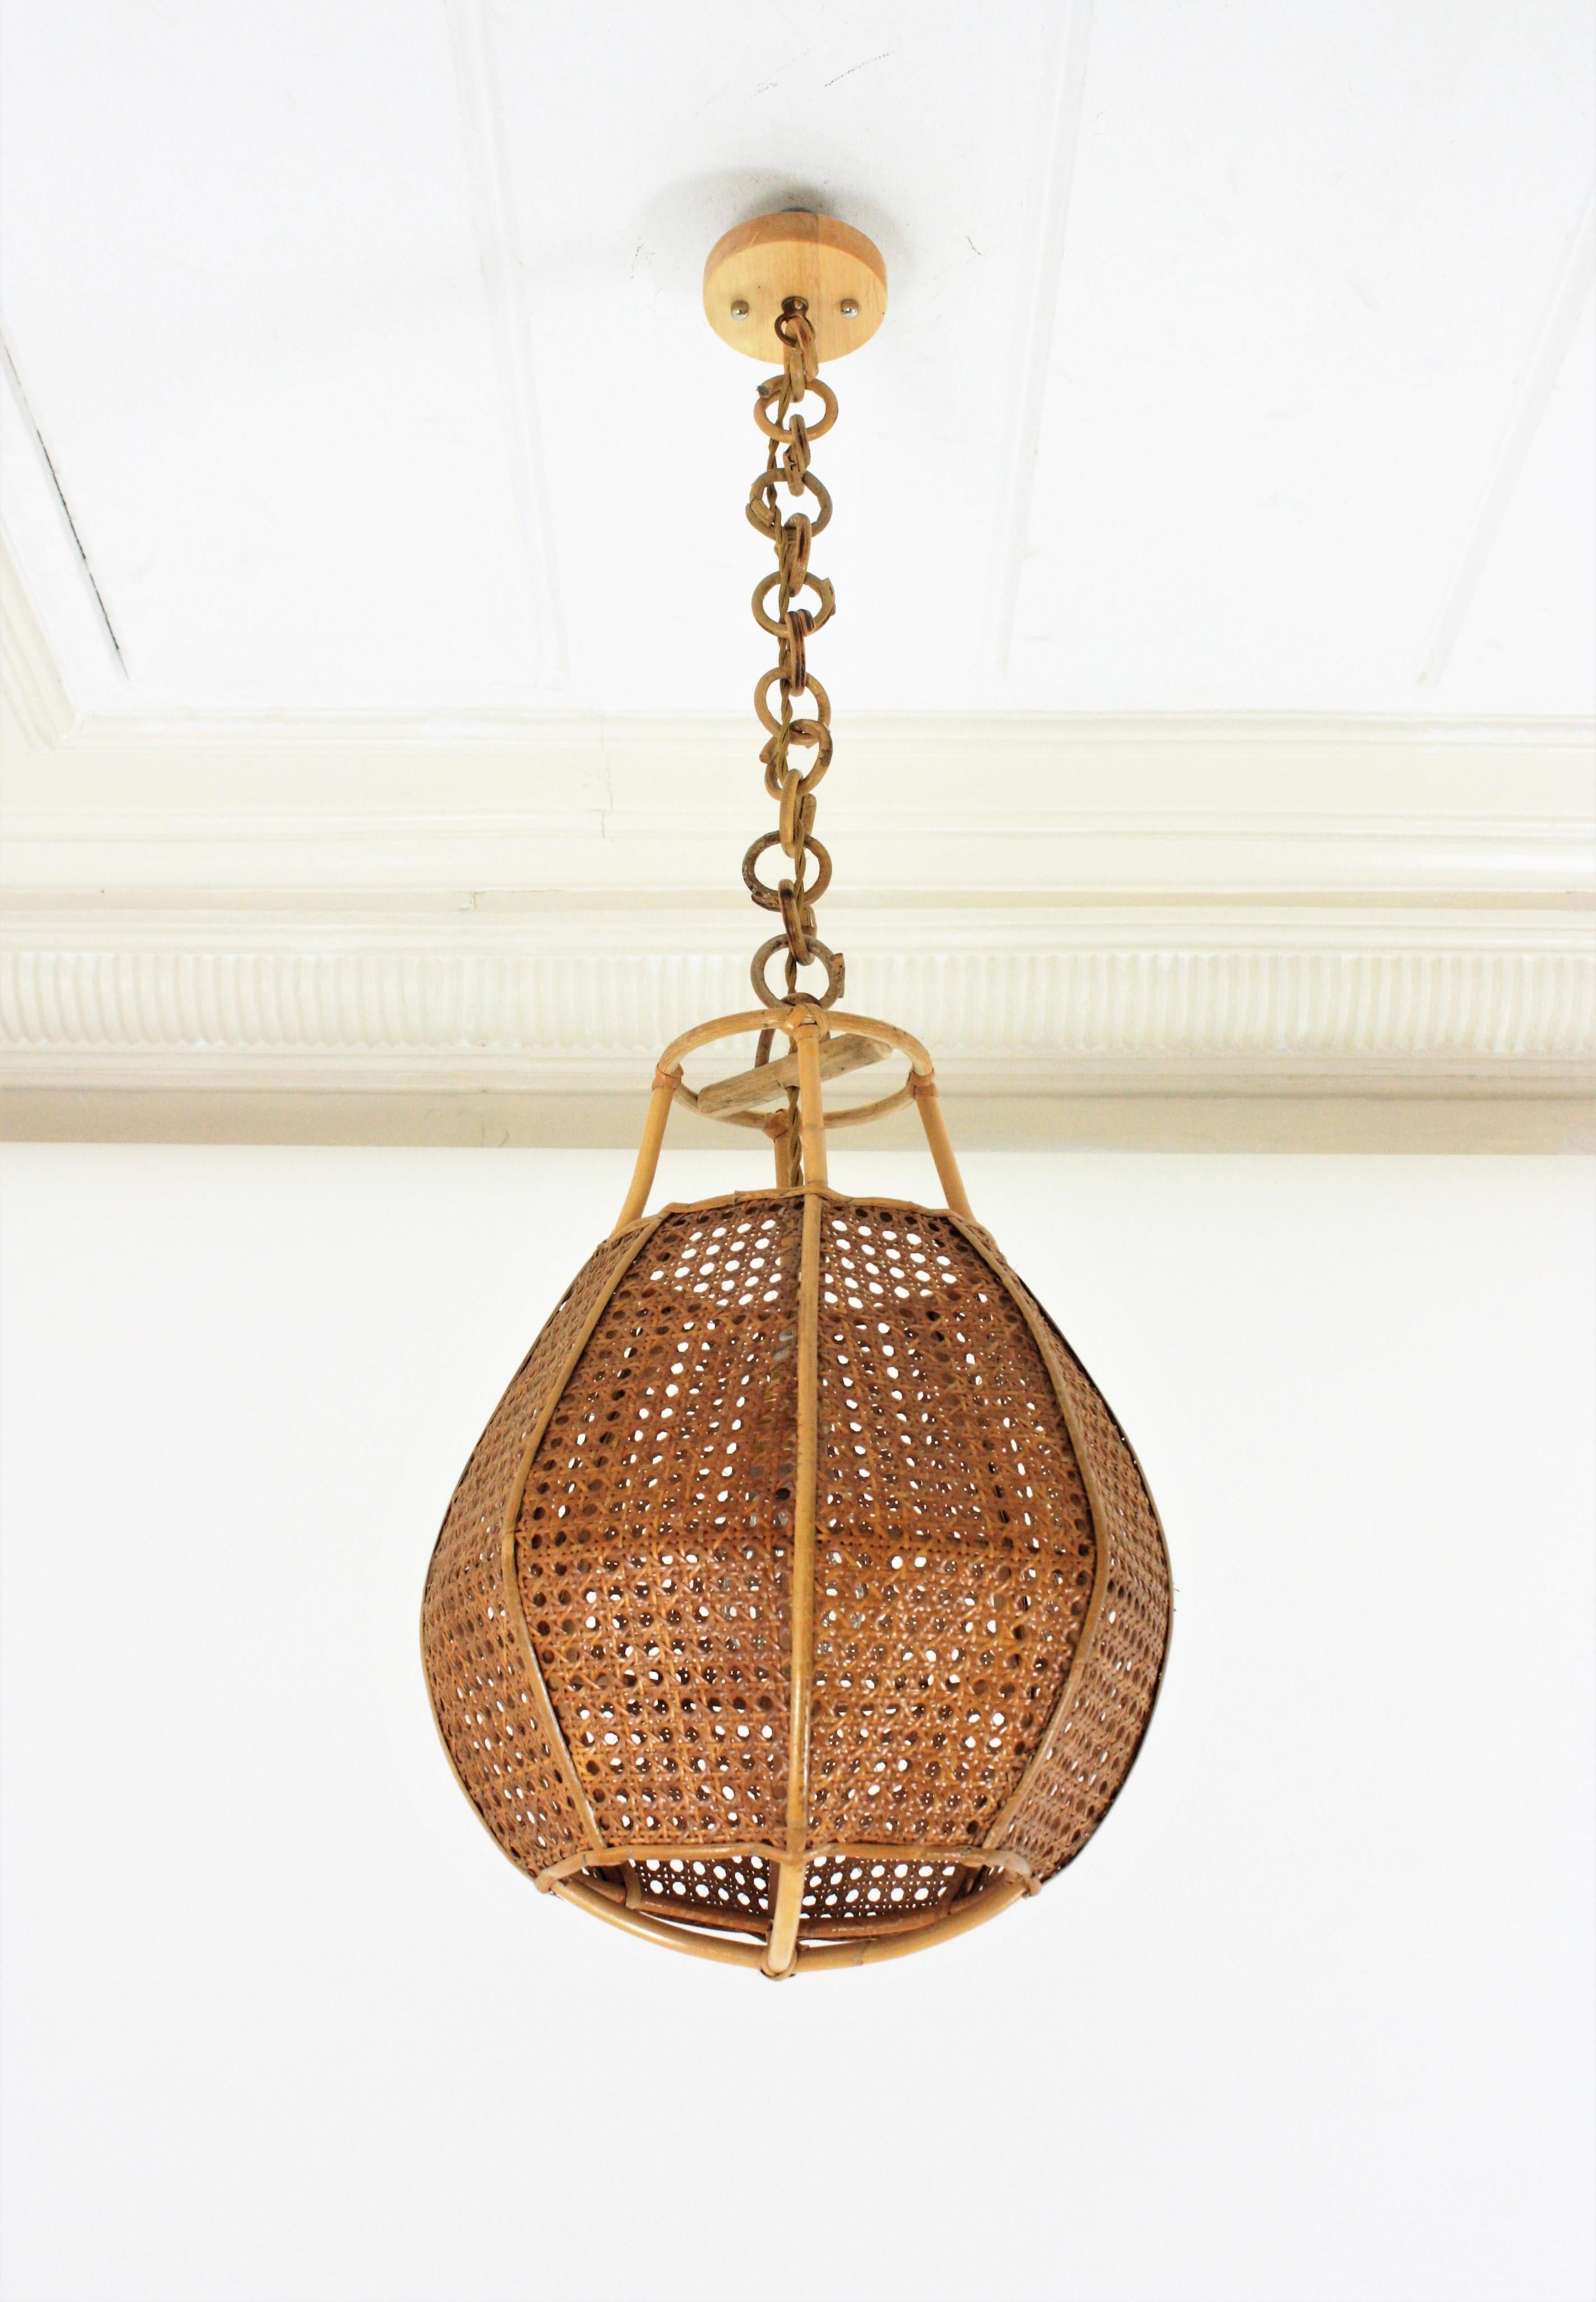 Hand-Crafted Italian Modernist Wicker Wire Rattan Globe Pendant Hanging Light